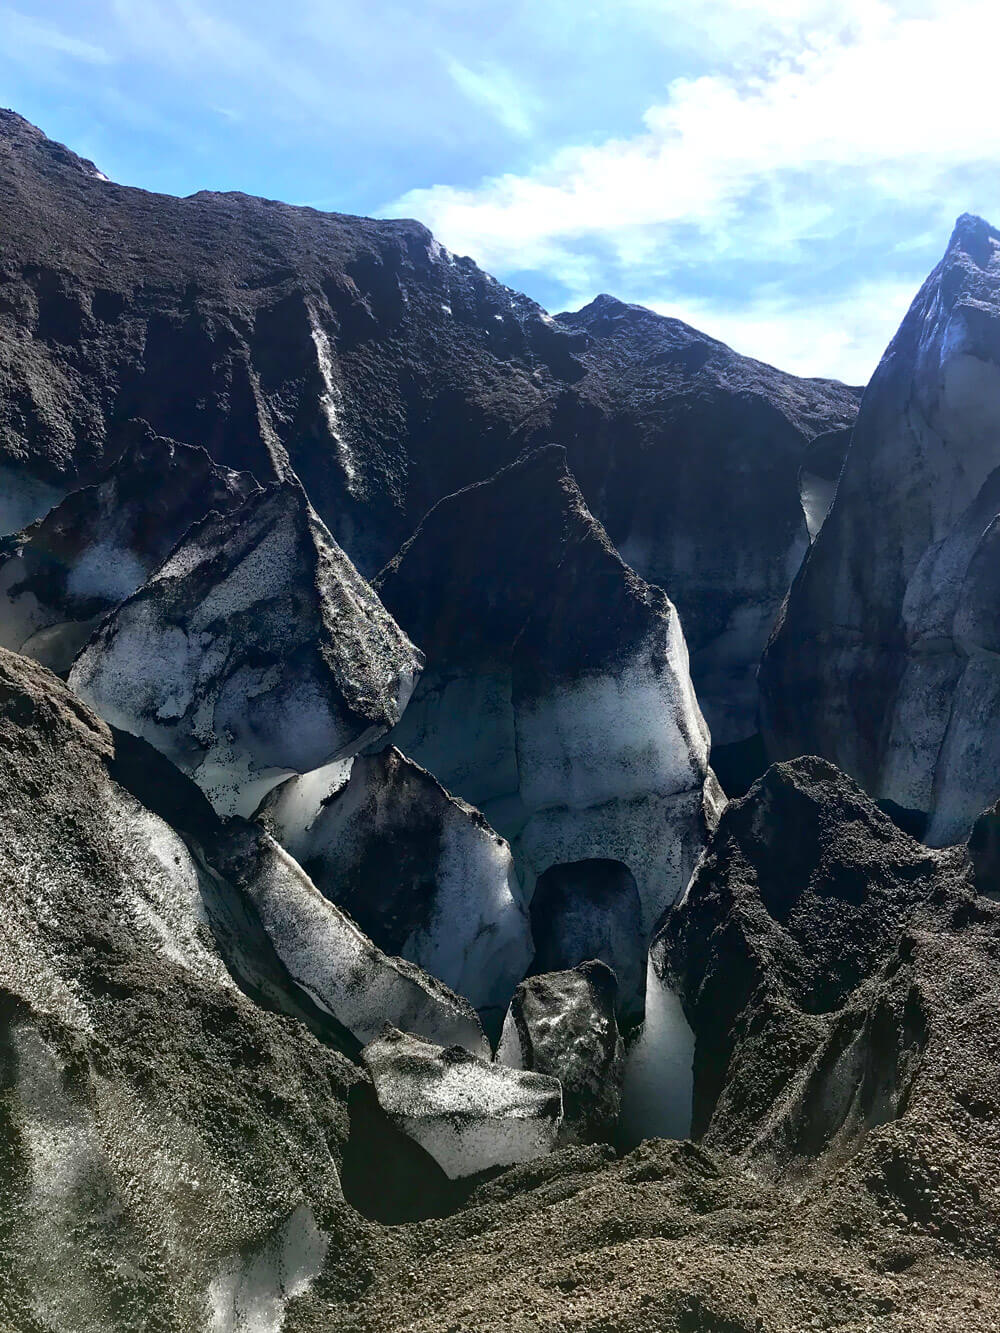 Crestas de hielo cubiertas de ceniza volcánica.